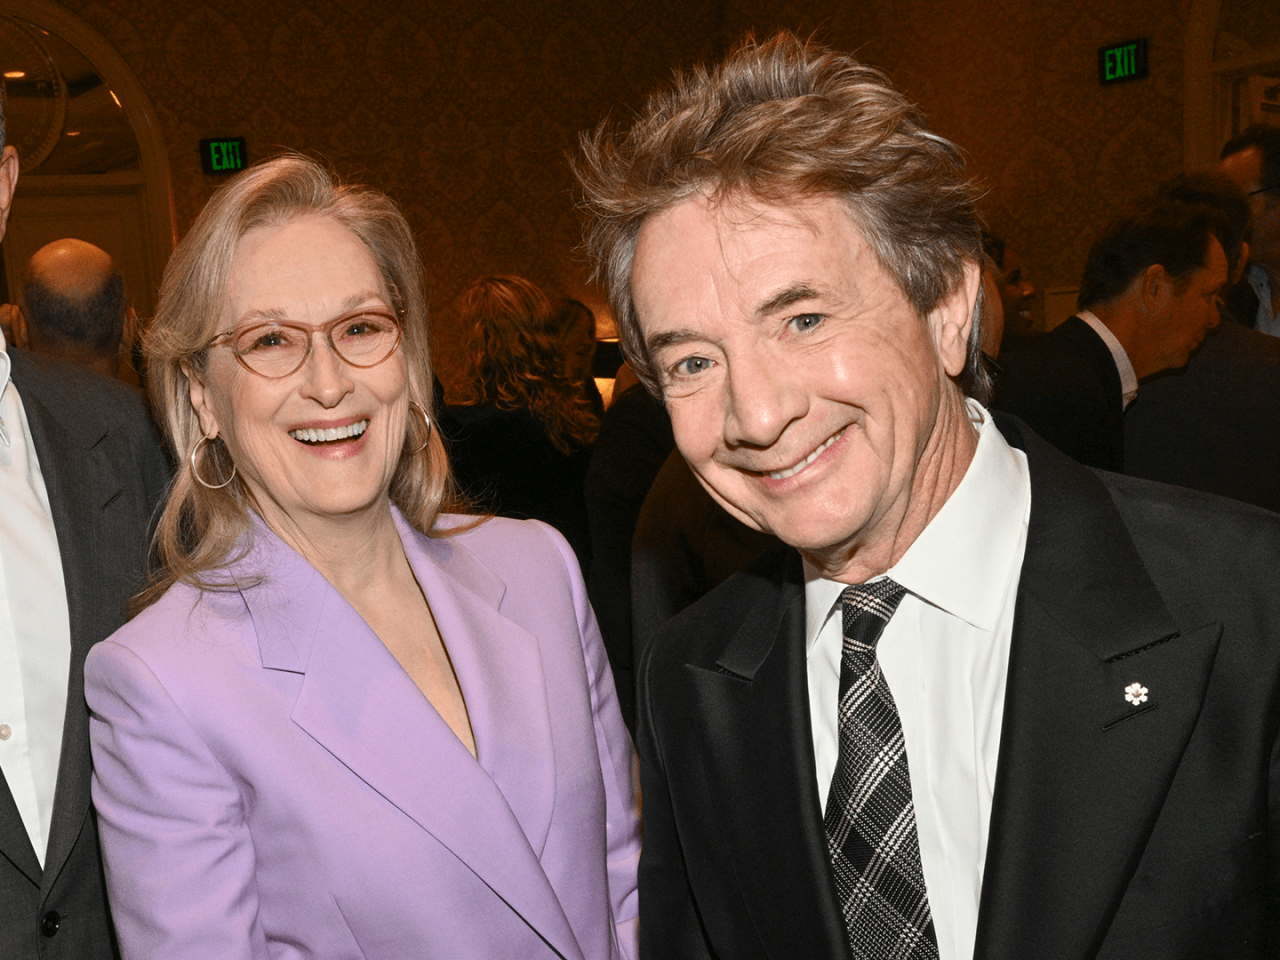 Martin Short and Meryl Streep Merrily Attend Broadway Show Together terbaru